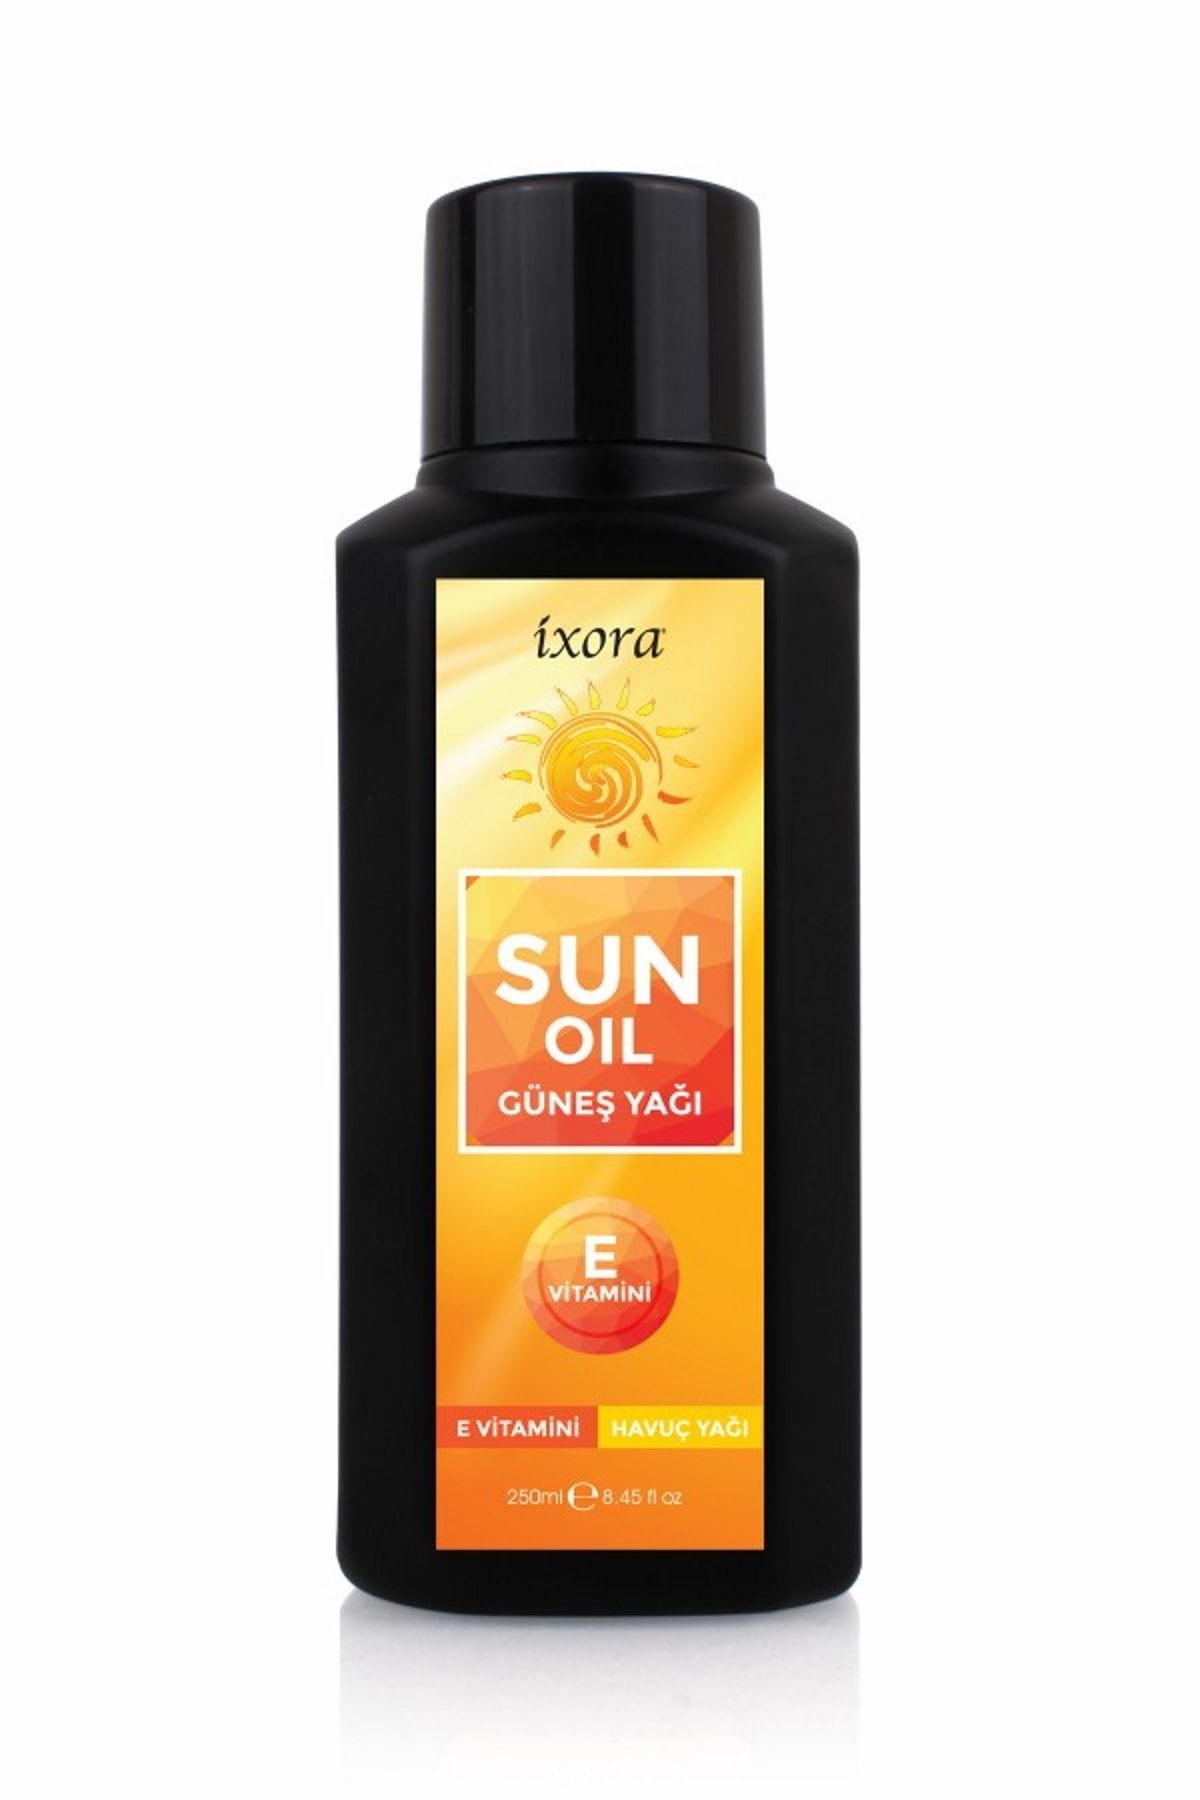 Ixora Sun Oil E Vitaminli 250ml Güneş Yağı (2 Adet Ekonomik Paket)